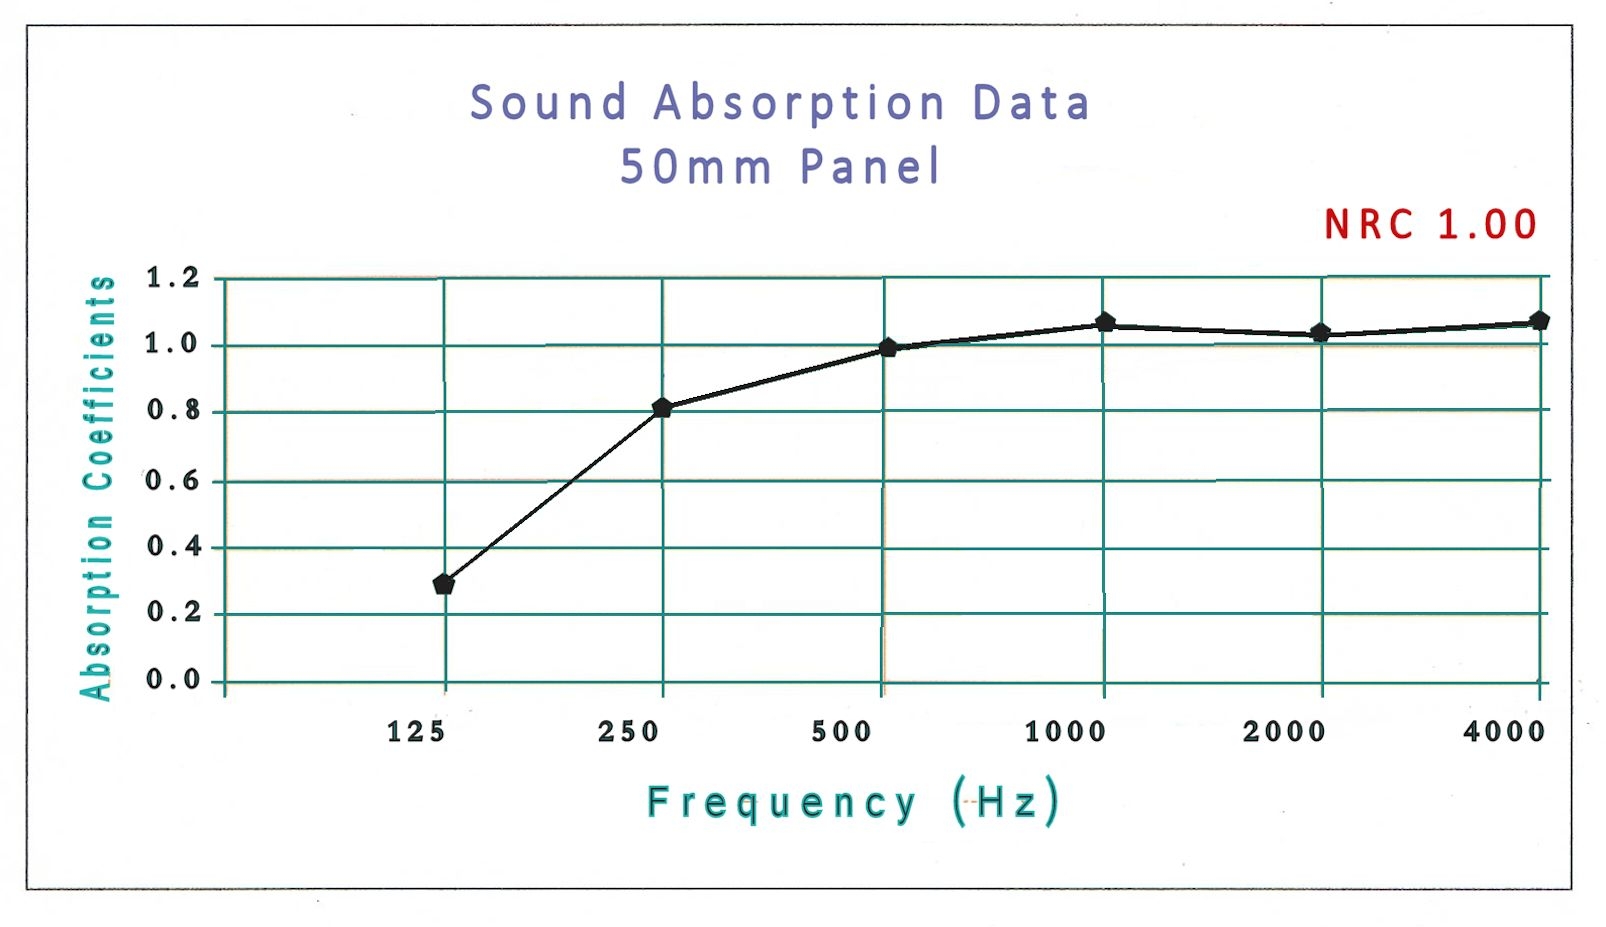 Acoustic Ceiling Tiles Sound Absorption Coefficient Acoustic Ceiling Tiles Sound Absorption Coefficient sound control and acoustic information professional acoustic 1606 X 927